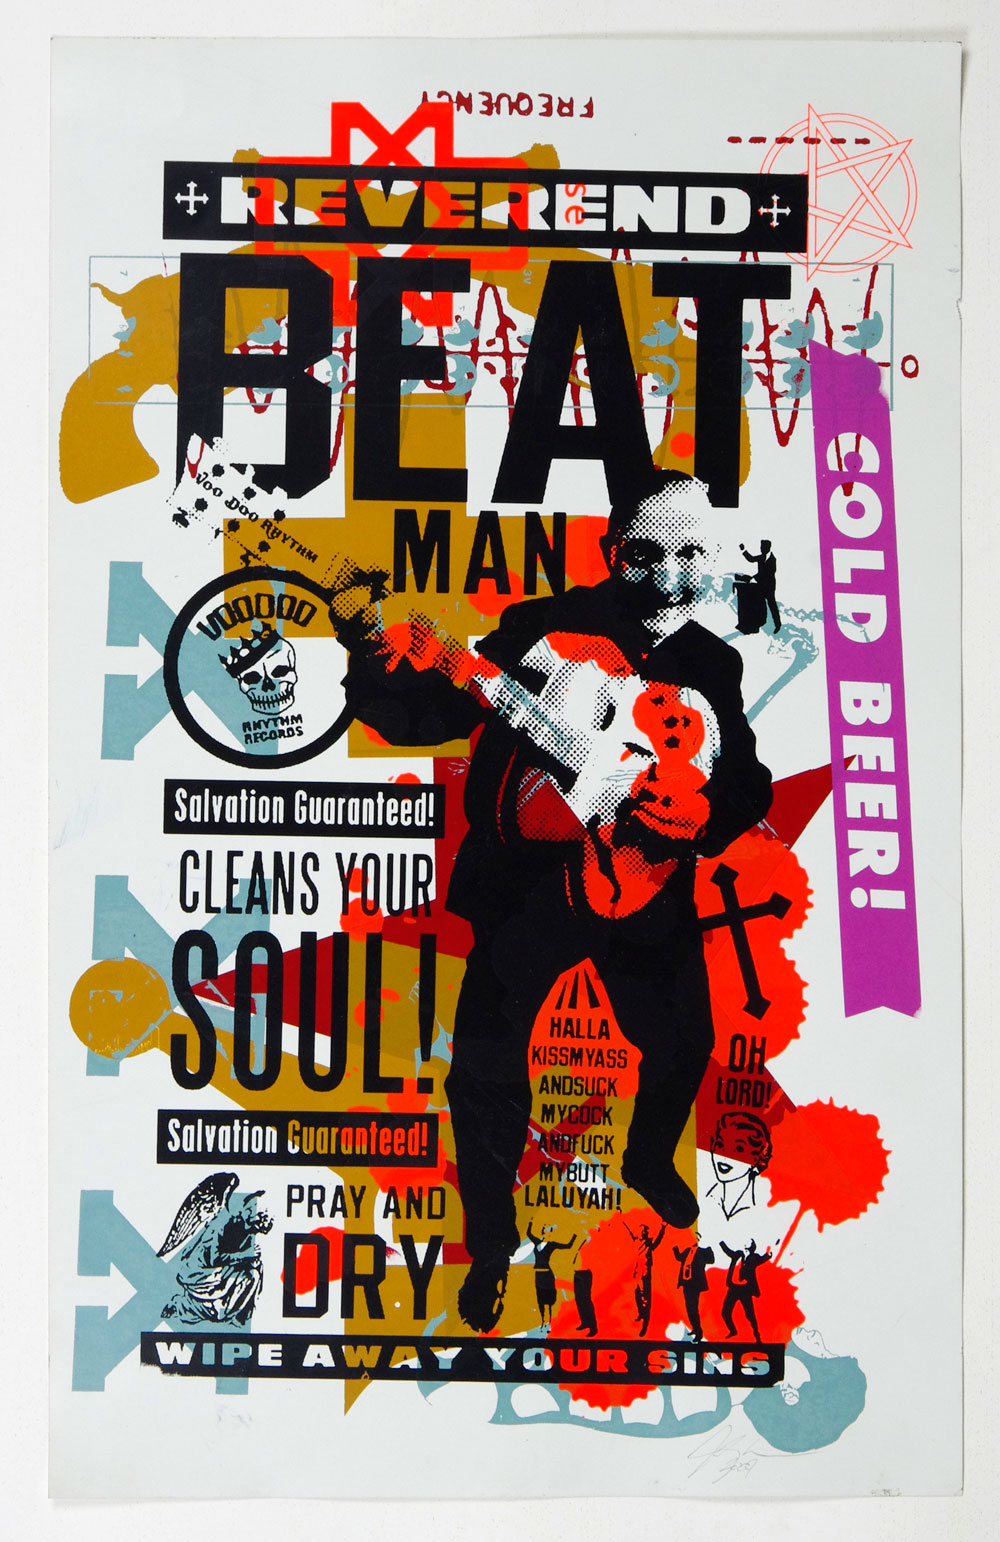 Reverend Beat Man Poster 2007 New Album Promo